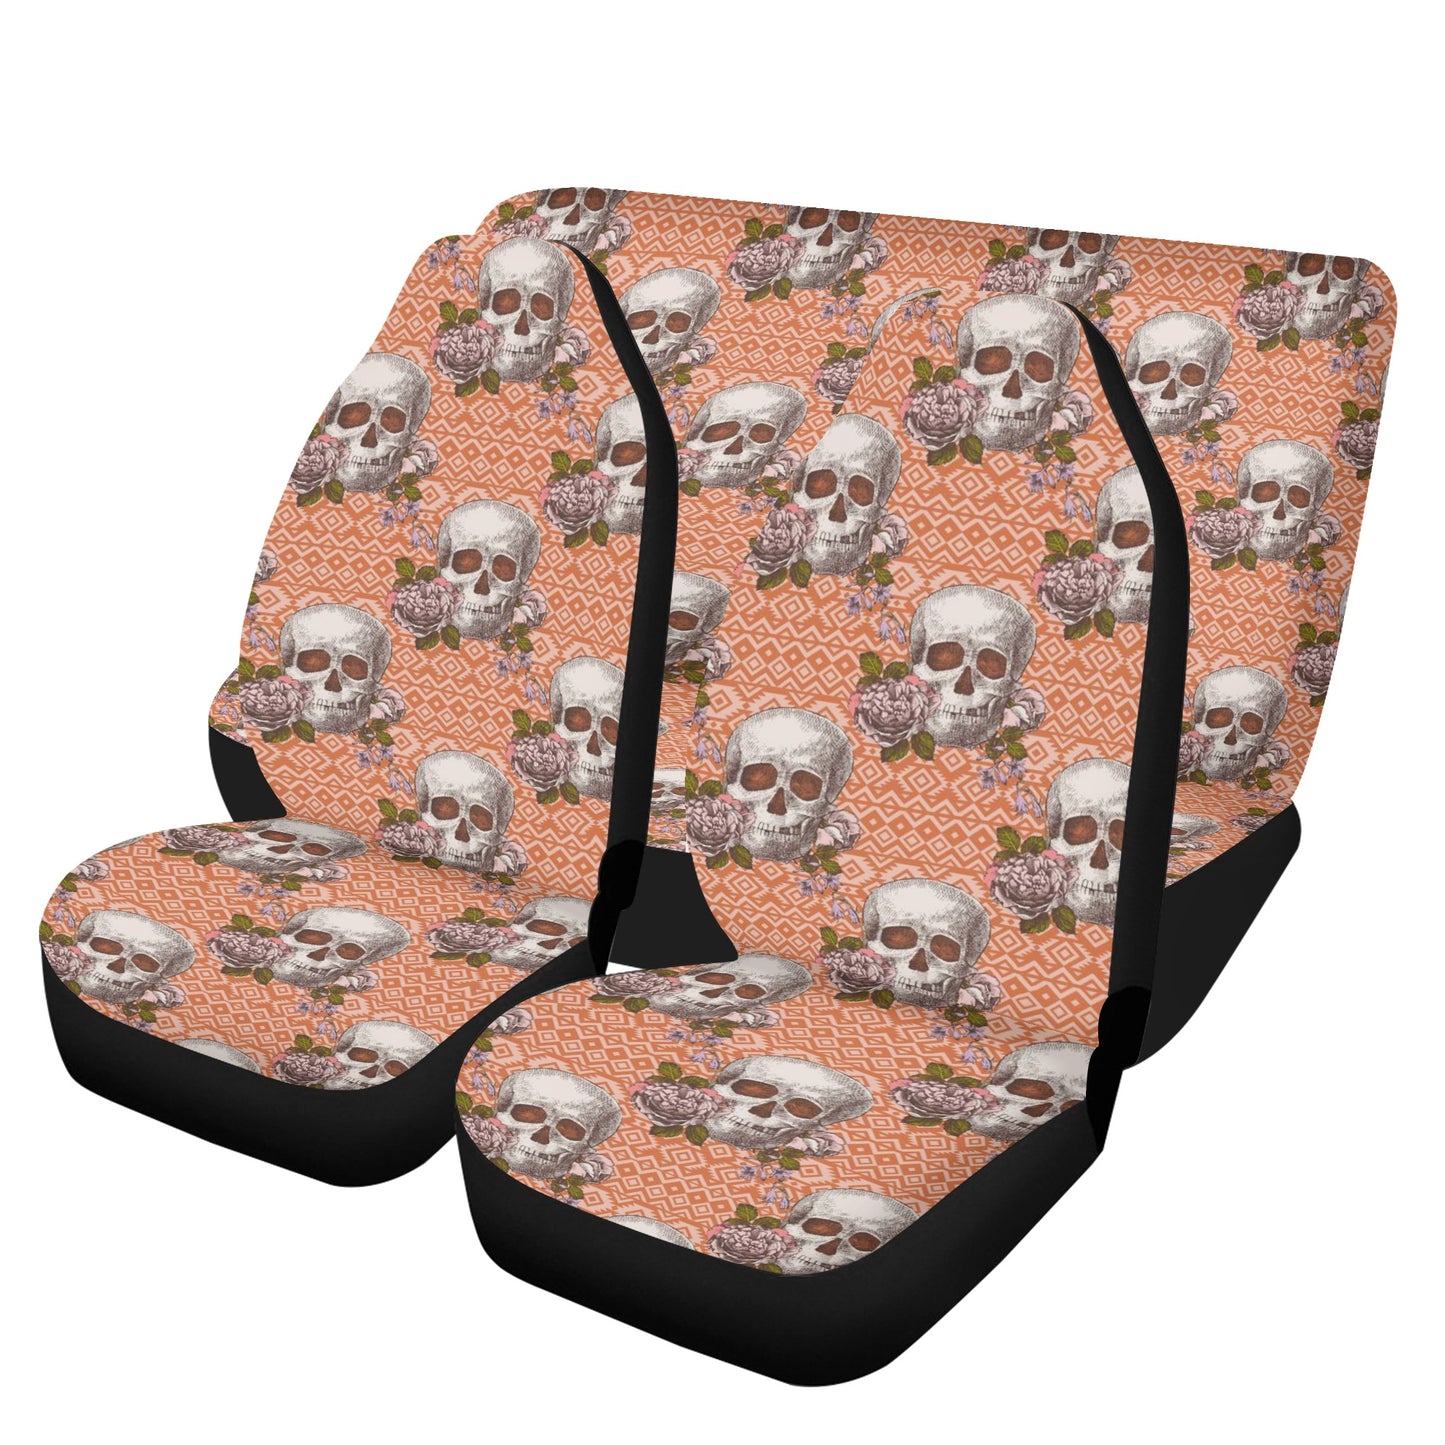 Floral sugar skull car rug, dia de los muertos skull mat for vehicles, floral skull mat for car, calaveras skull seat cover for car, candy s